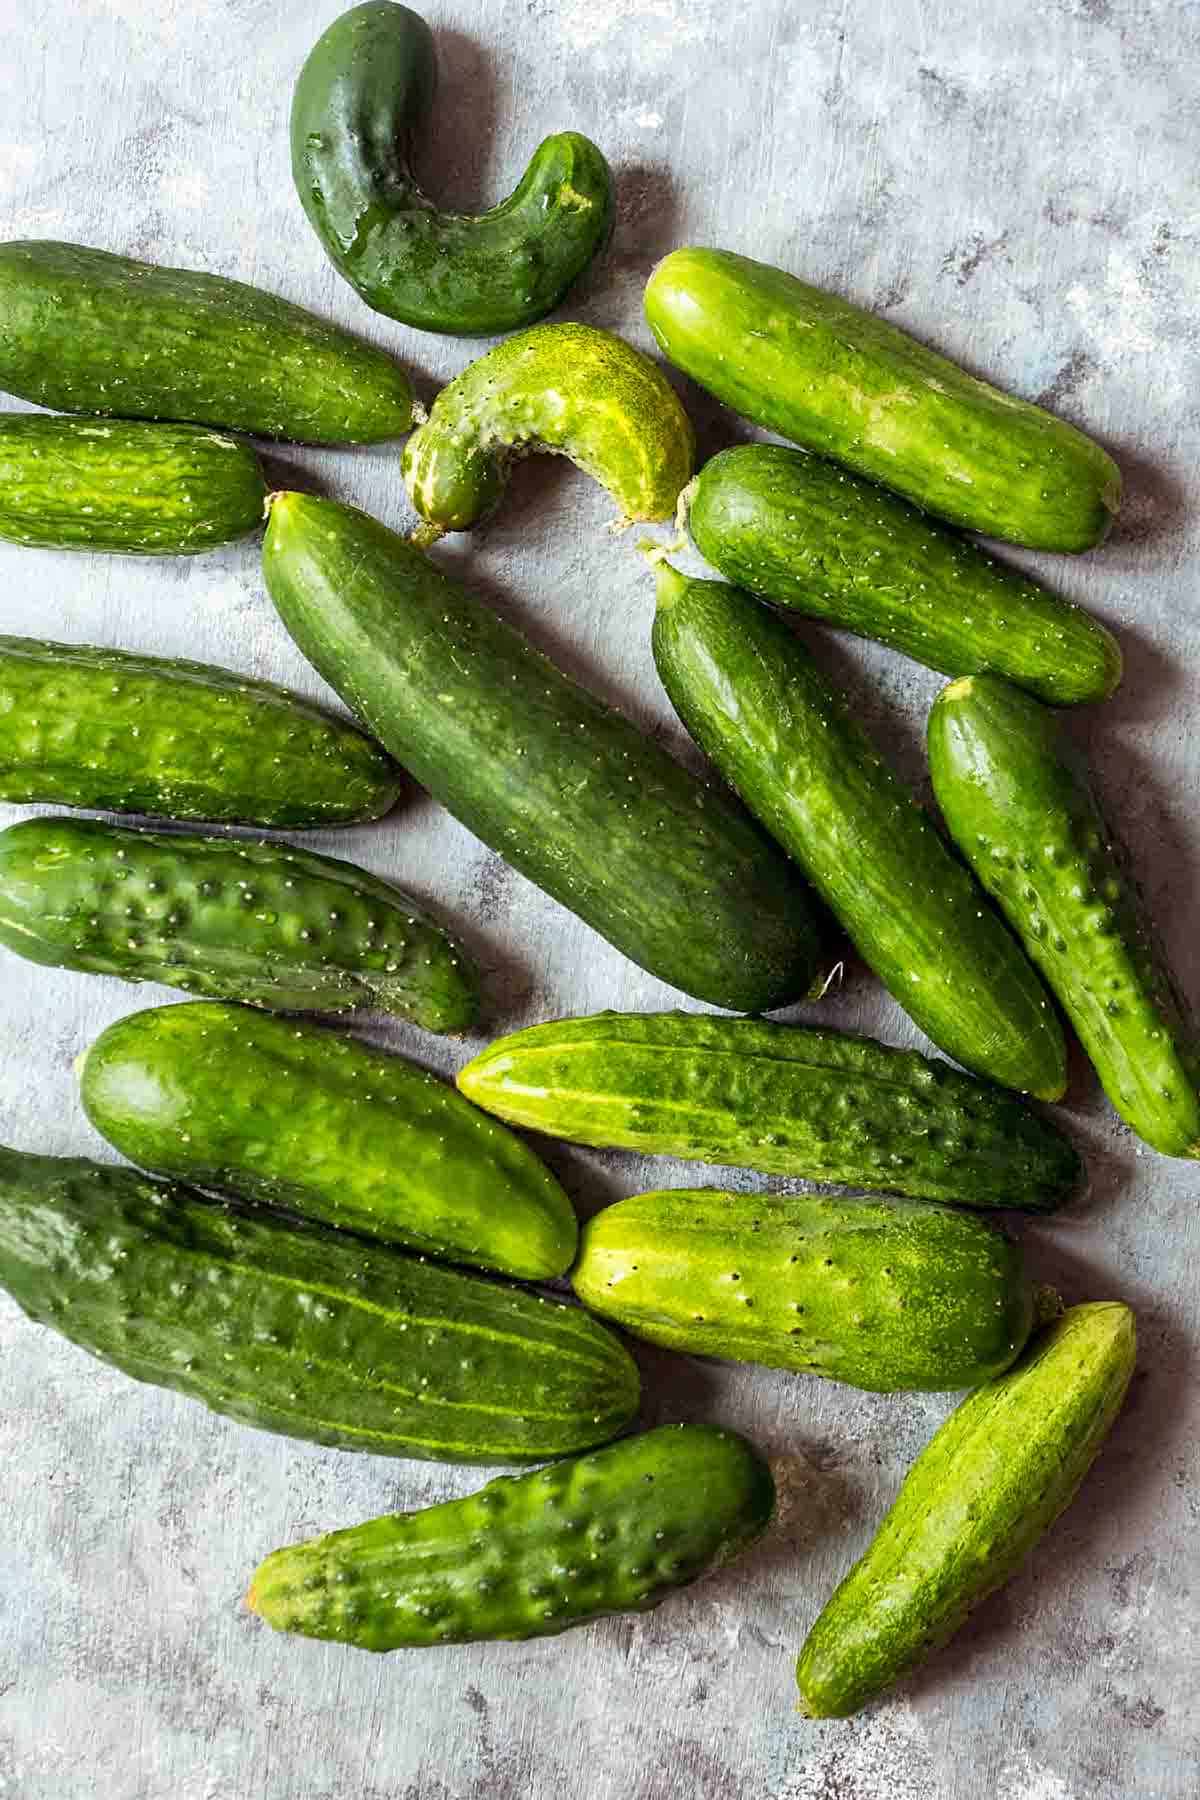 Homegrown pickling cucumbers